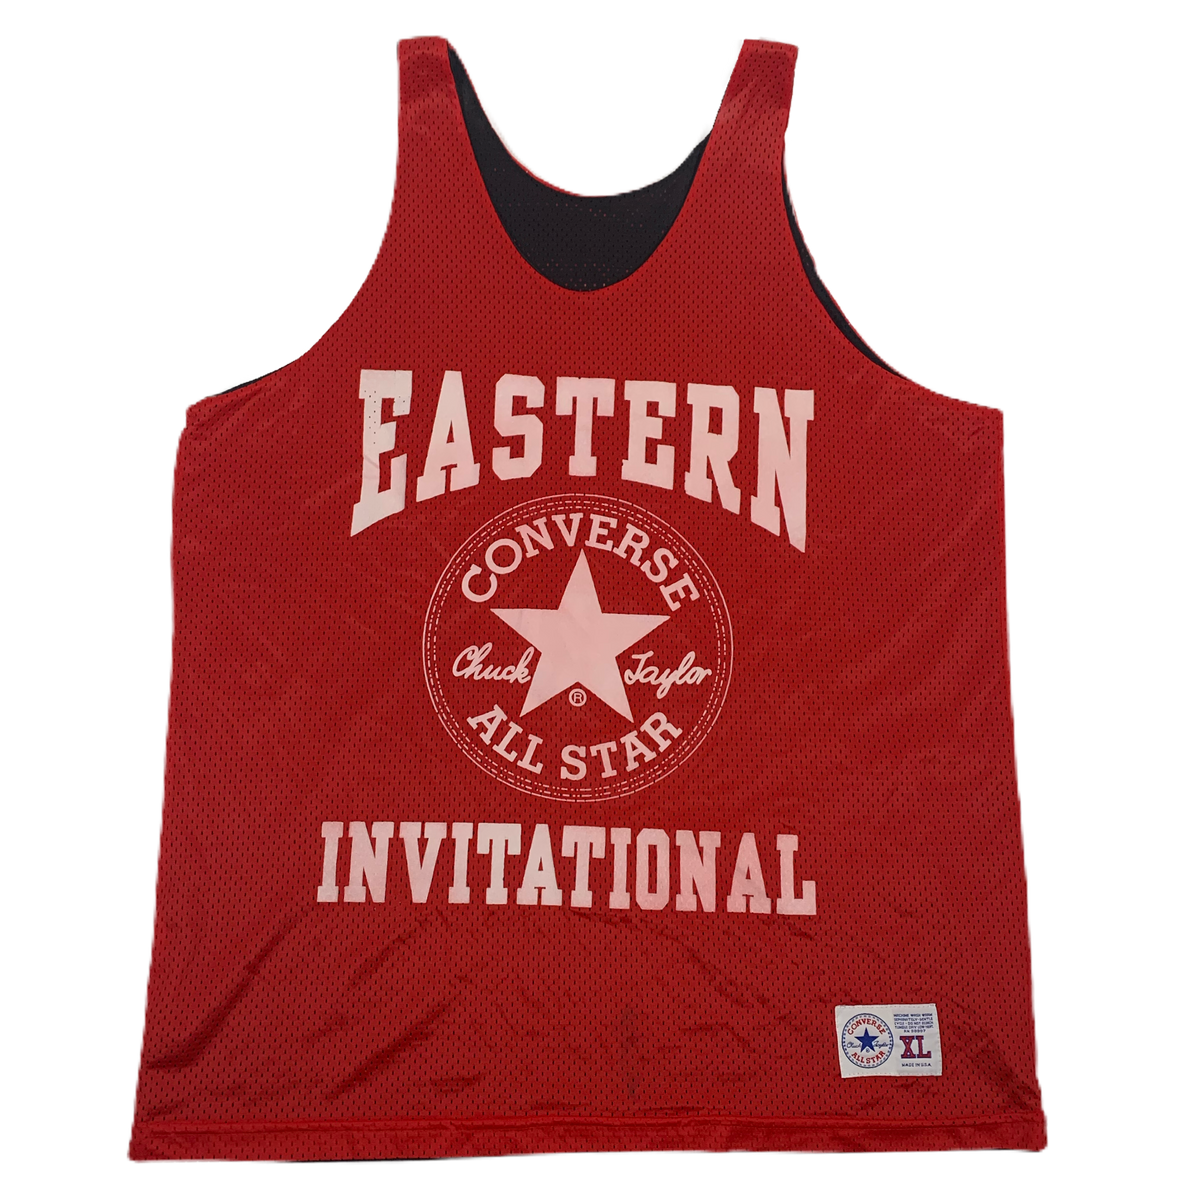 Vintage Converse “Eastern Invitational” Reversible Basketball Jersey - jointcustodydc